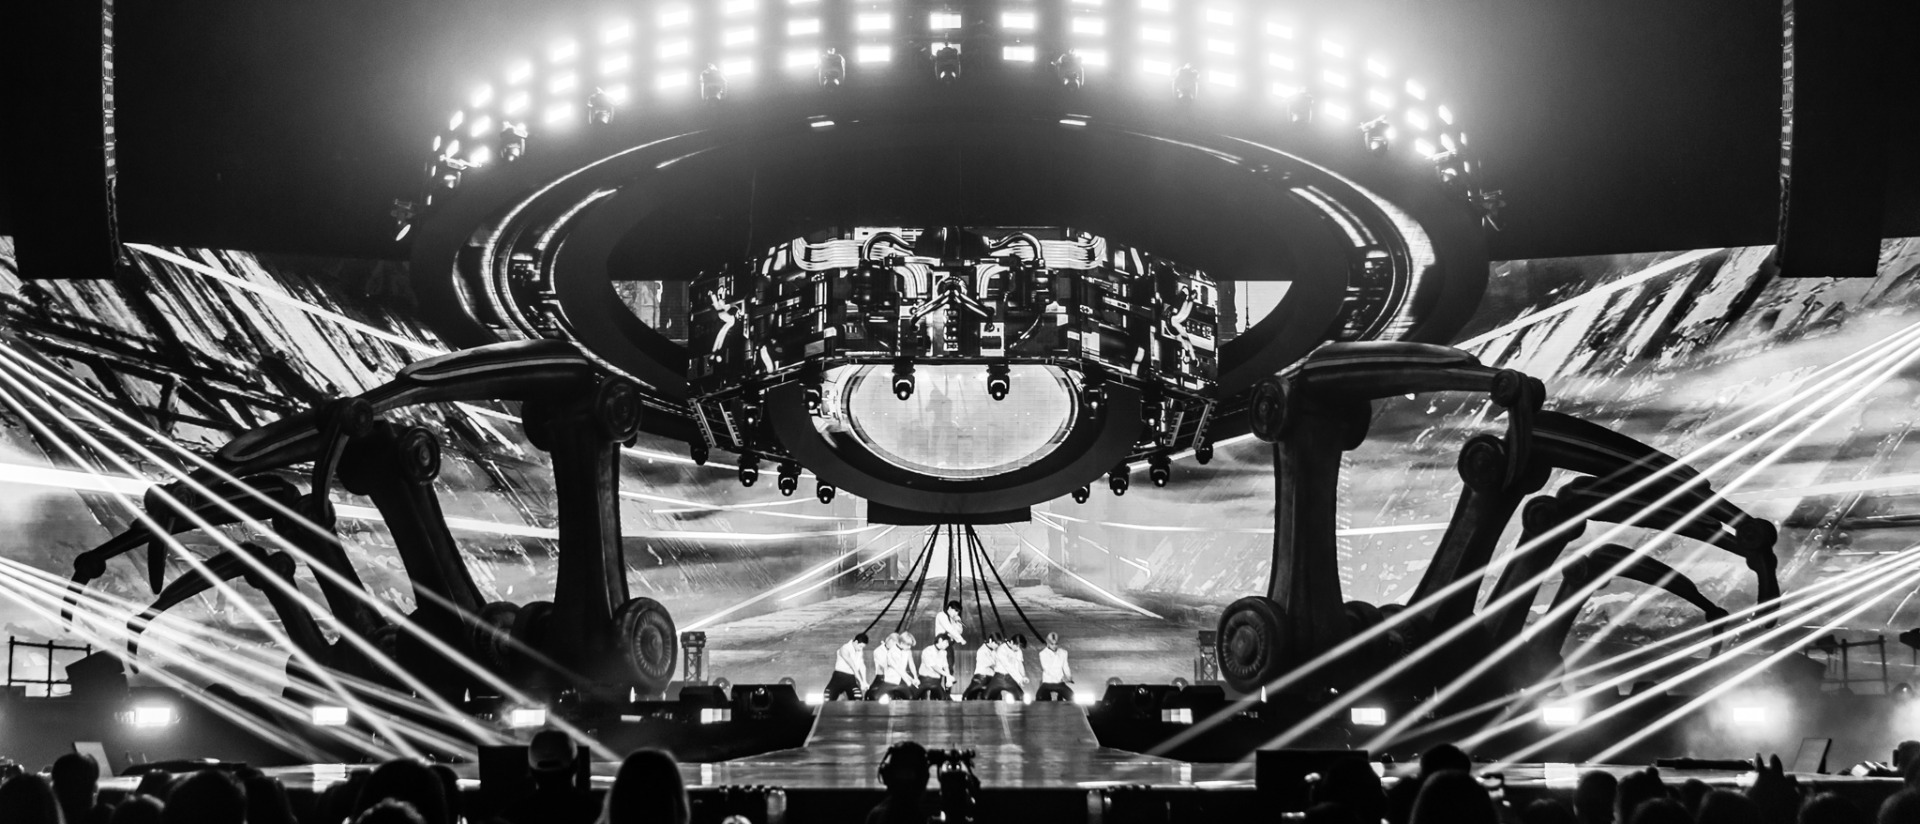 STRAY KIDS 2ND WORLD TOUR “MANIAC” Live in Bangkok